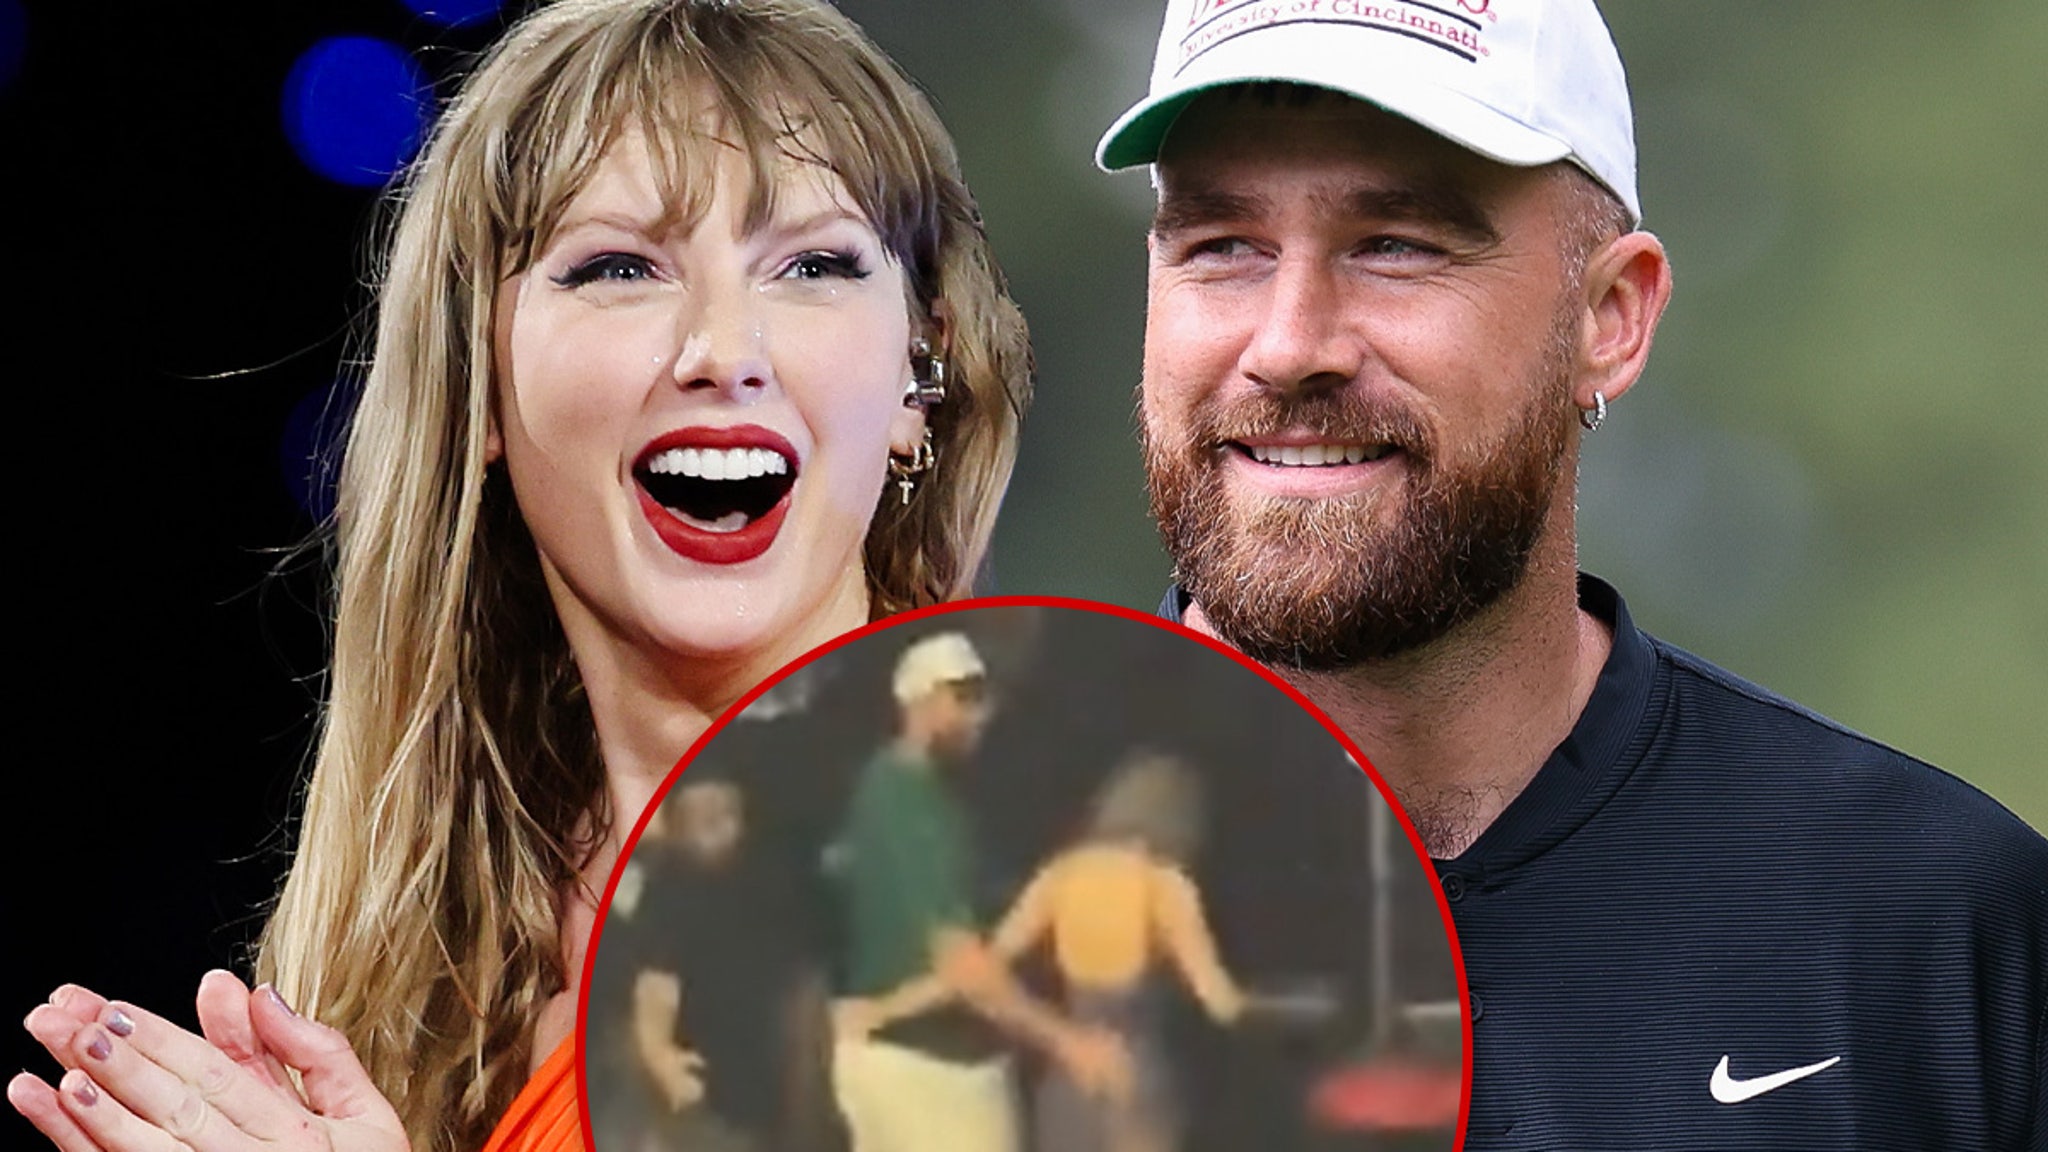 Travis Kelce puts arm around Taylor Swift's waist after 'Eras' show in Germany